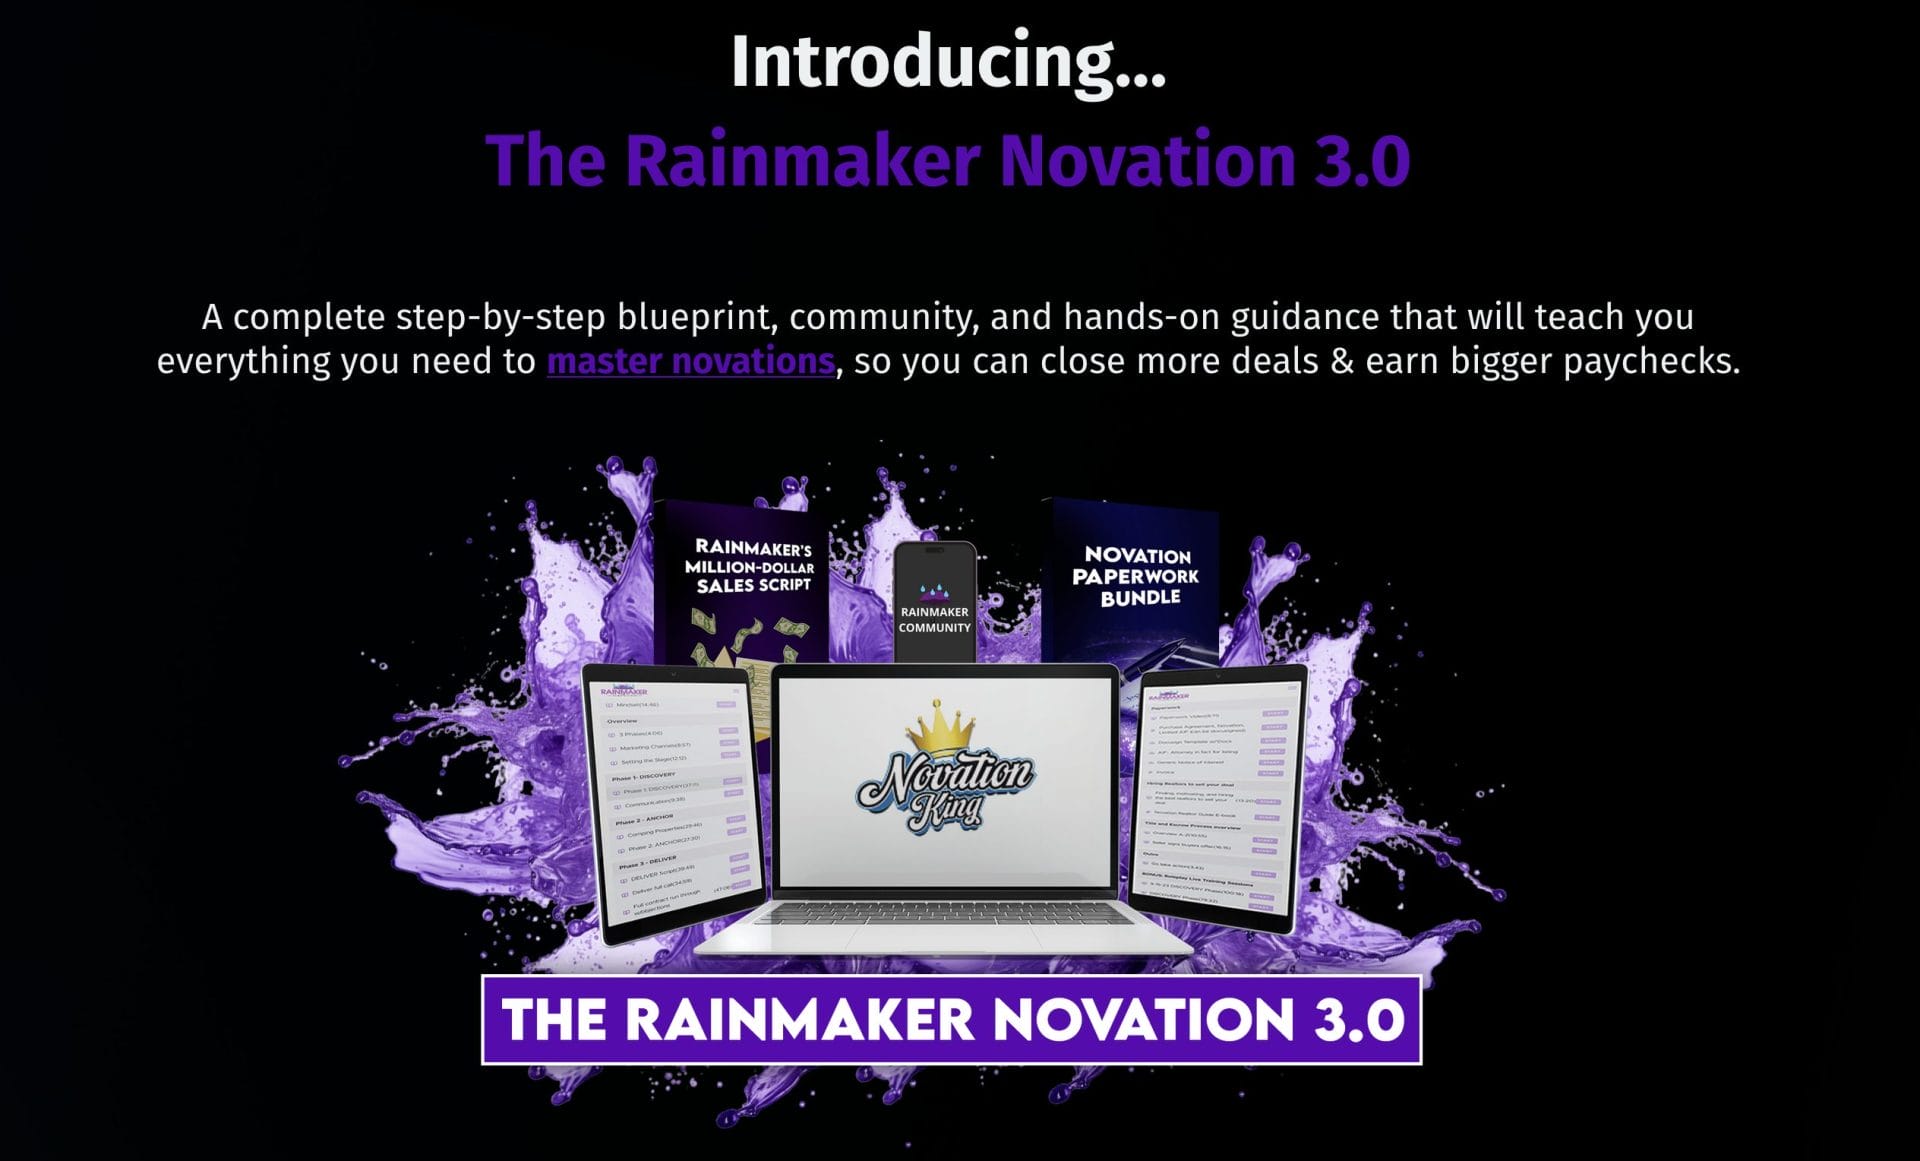 Richard Wonders – Rainmaker Novation 3.0